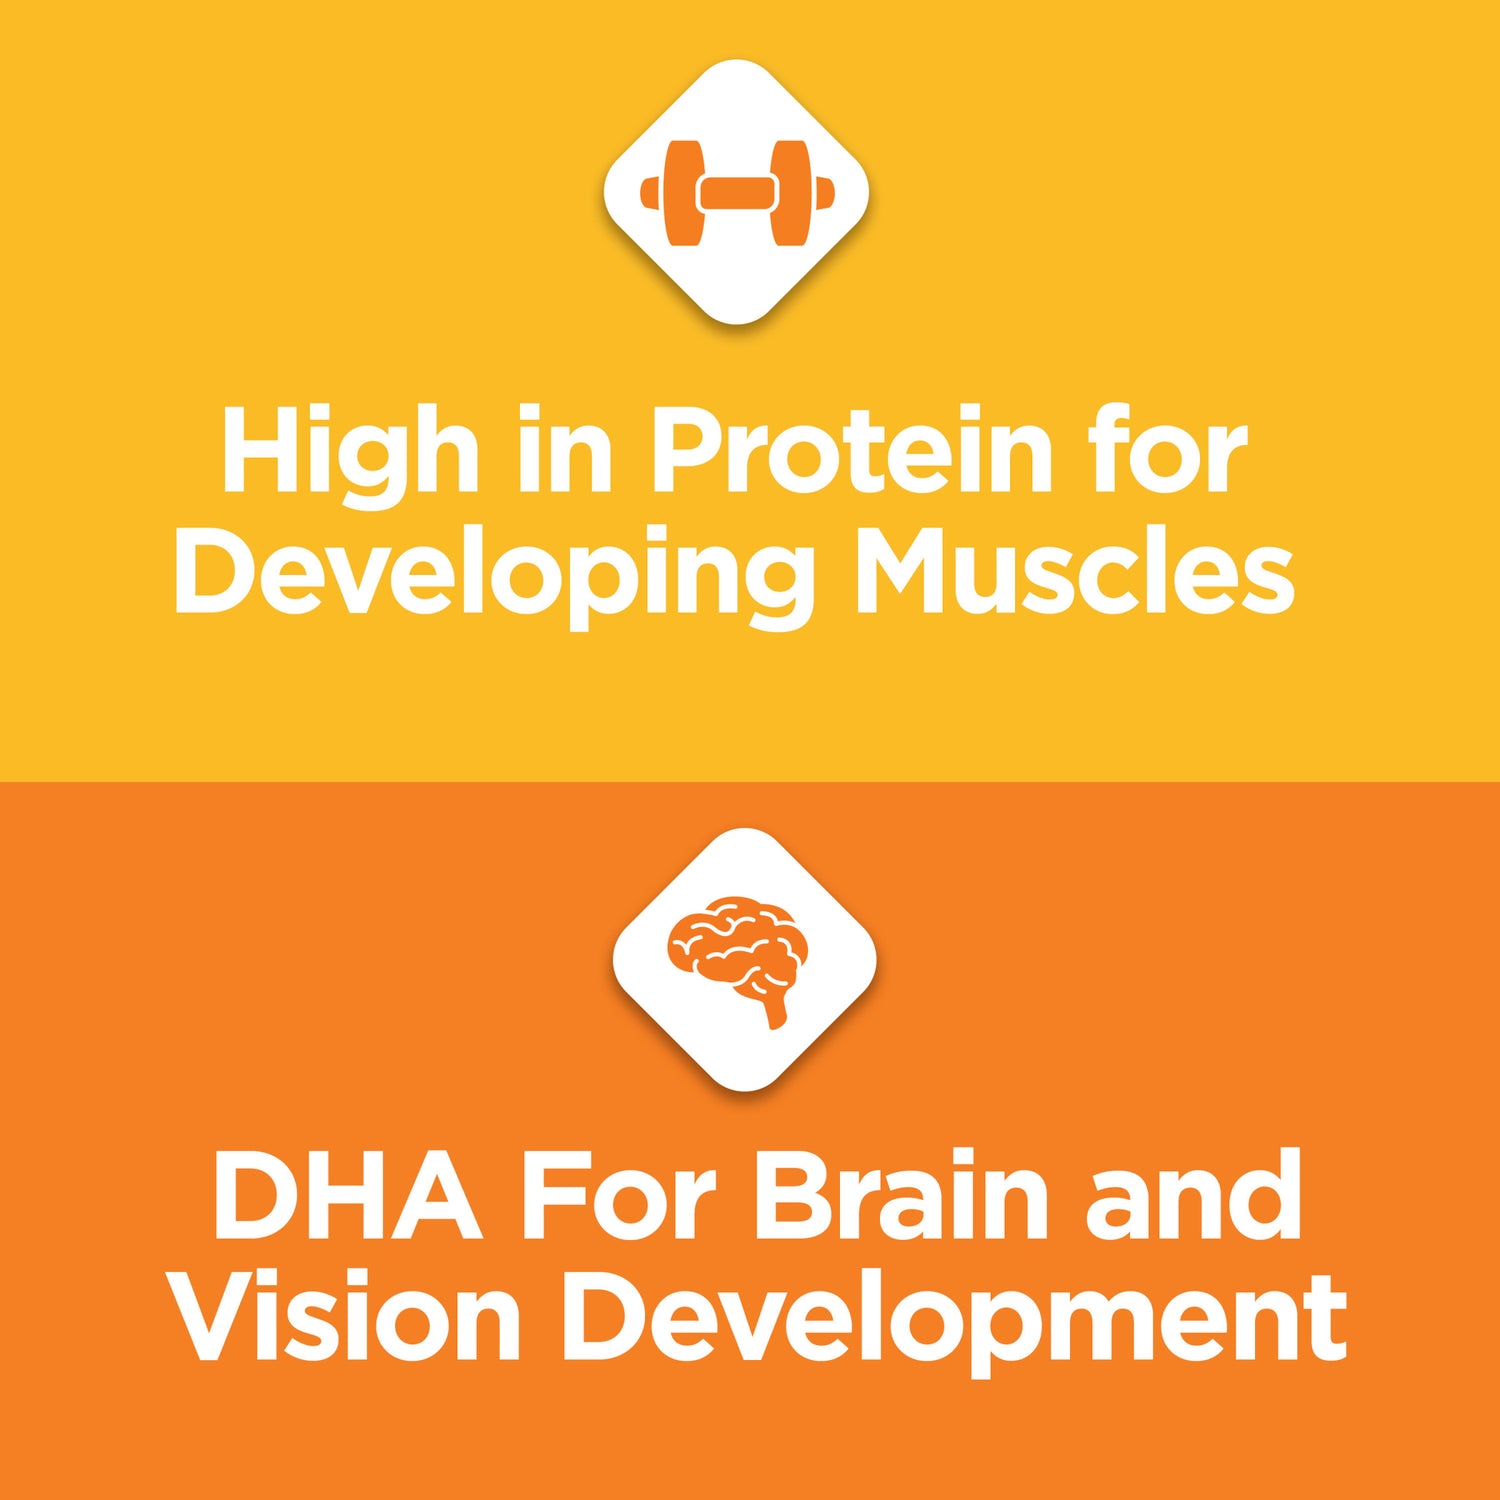 Purina Kitten Chow Dry Kitten Food, Nurture Muscle + Brain Development, 3.15 Lb. Bag